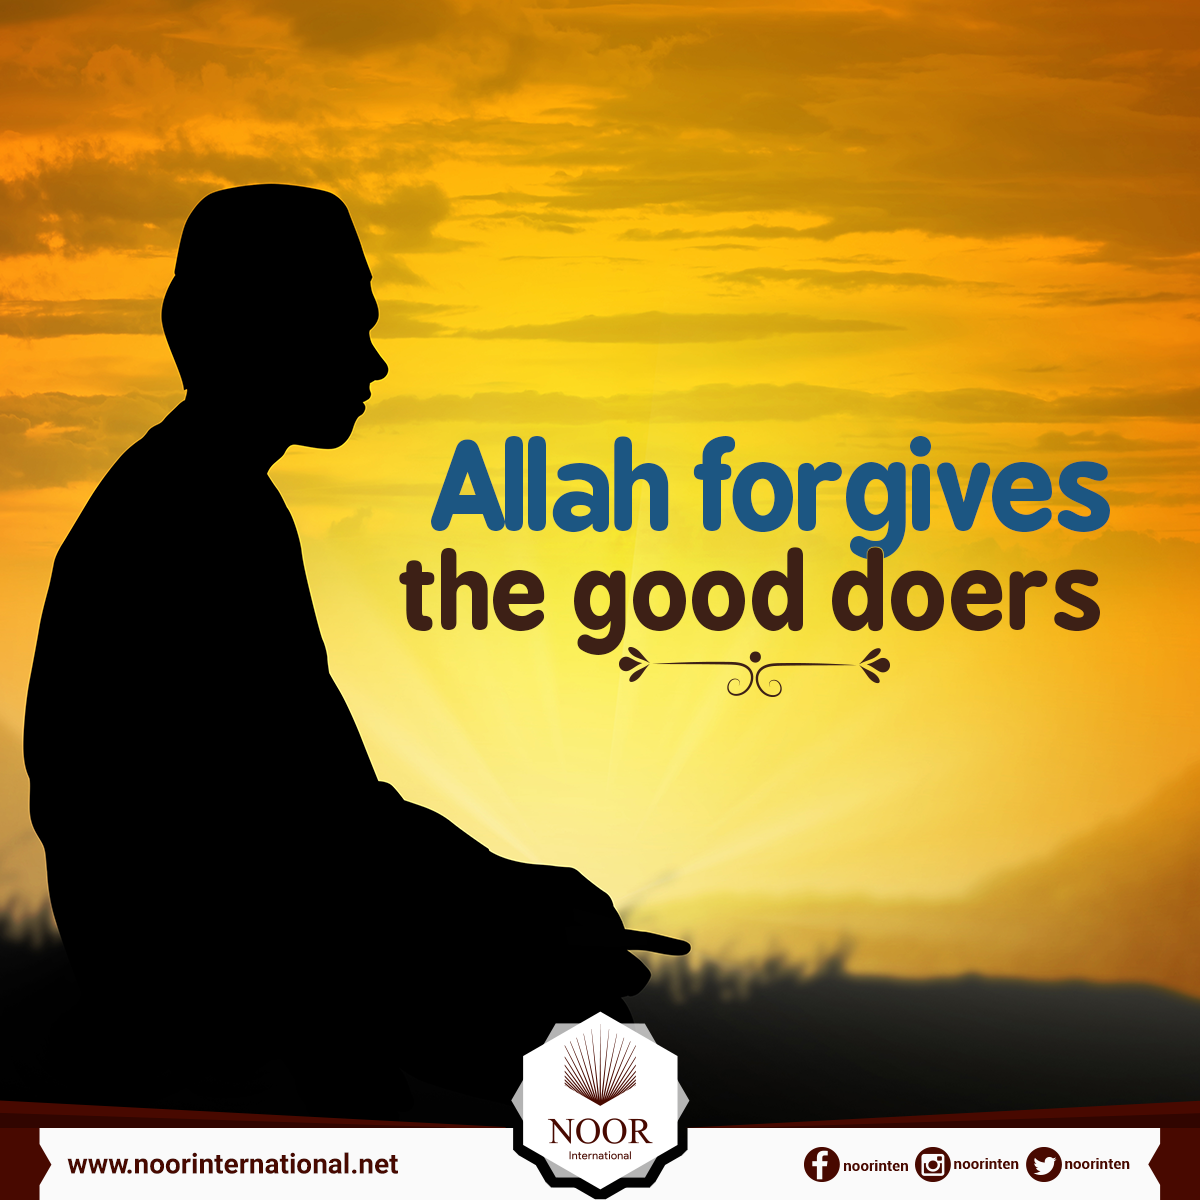 Allah forgives the good doers